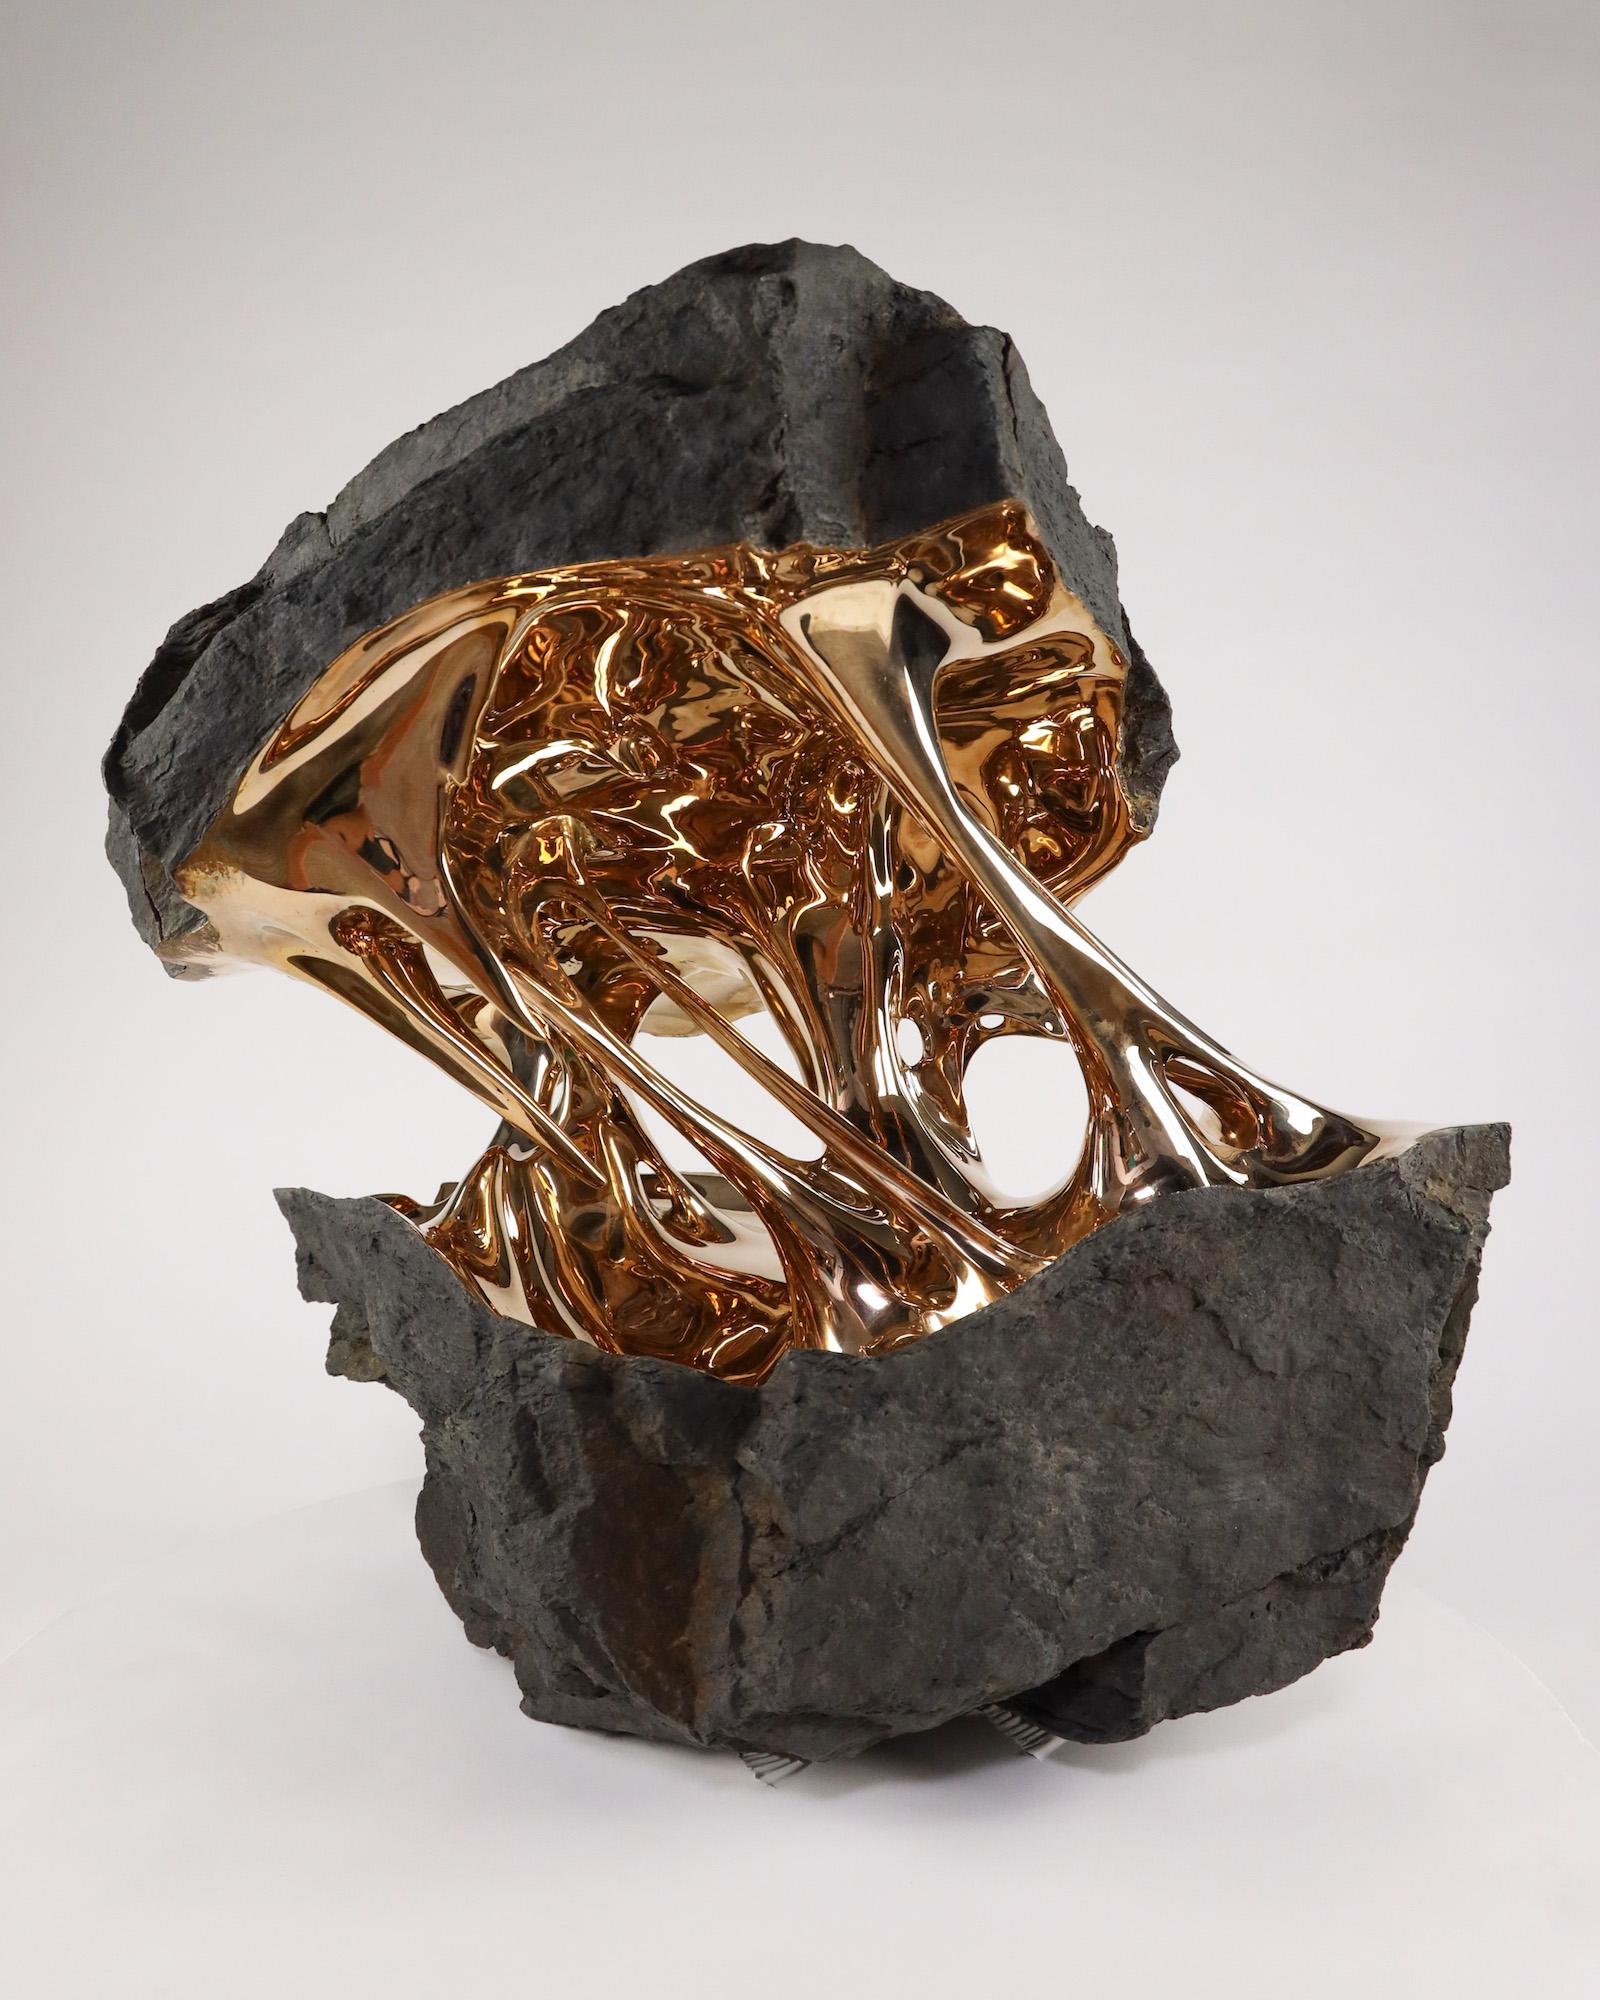 Gaïa by Romain Langlois - Rock-like bronze sculpture, golden, abstract For Sale 4